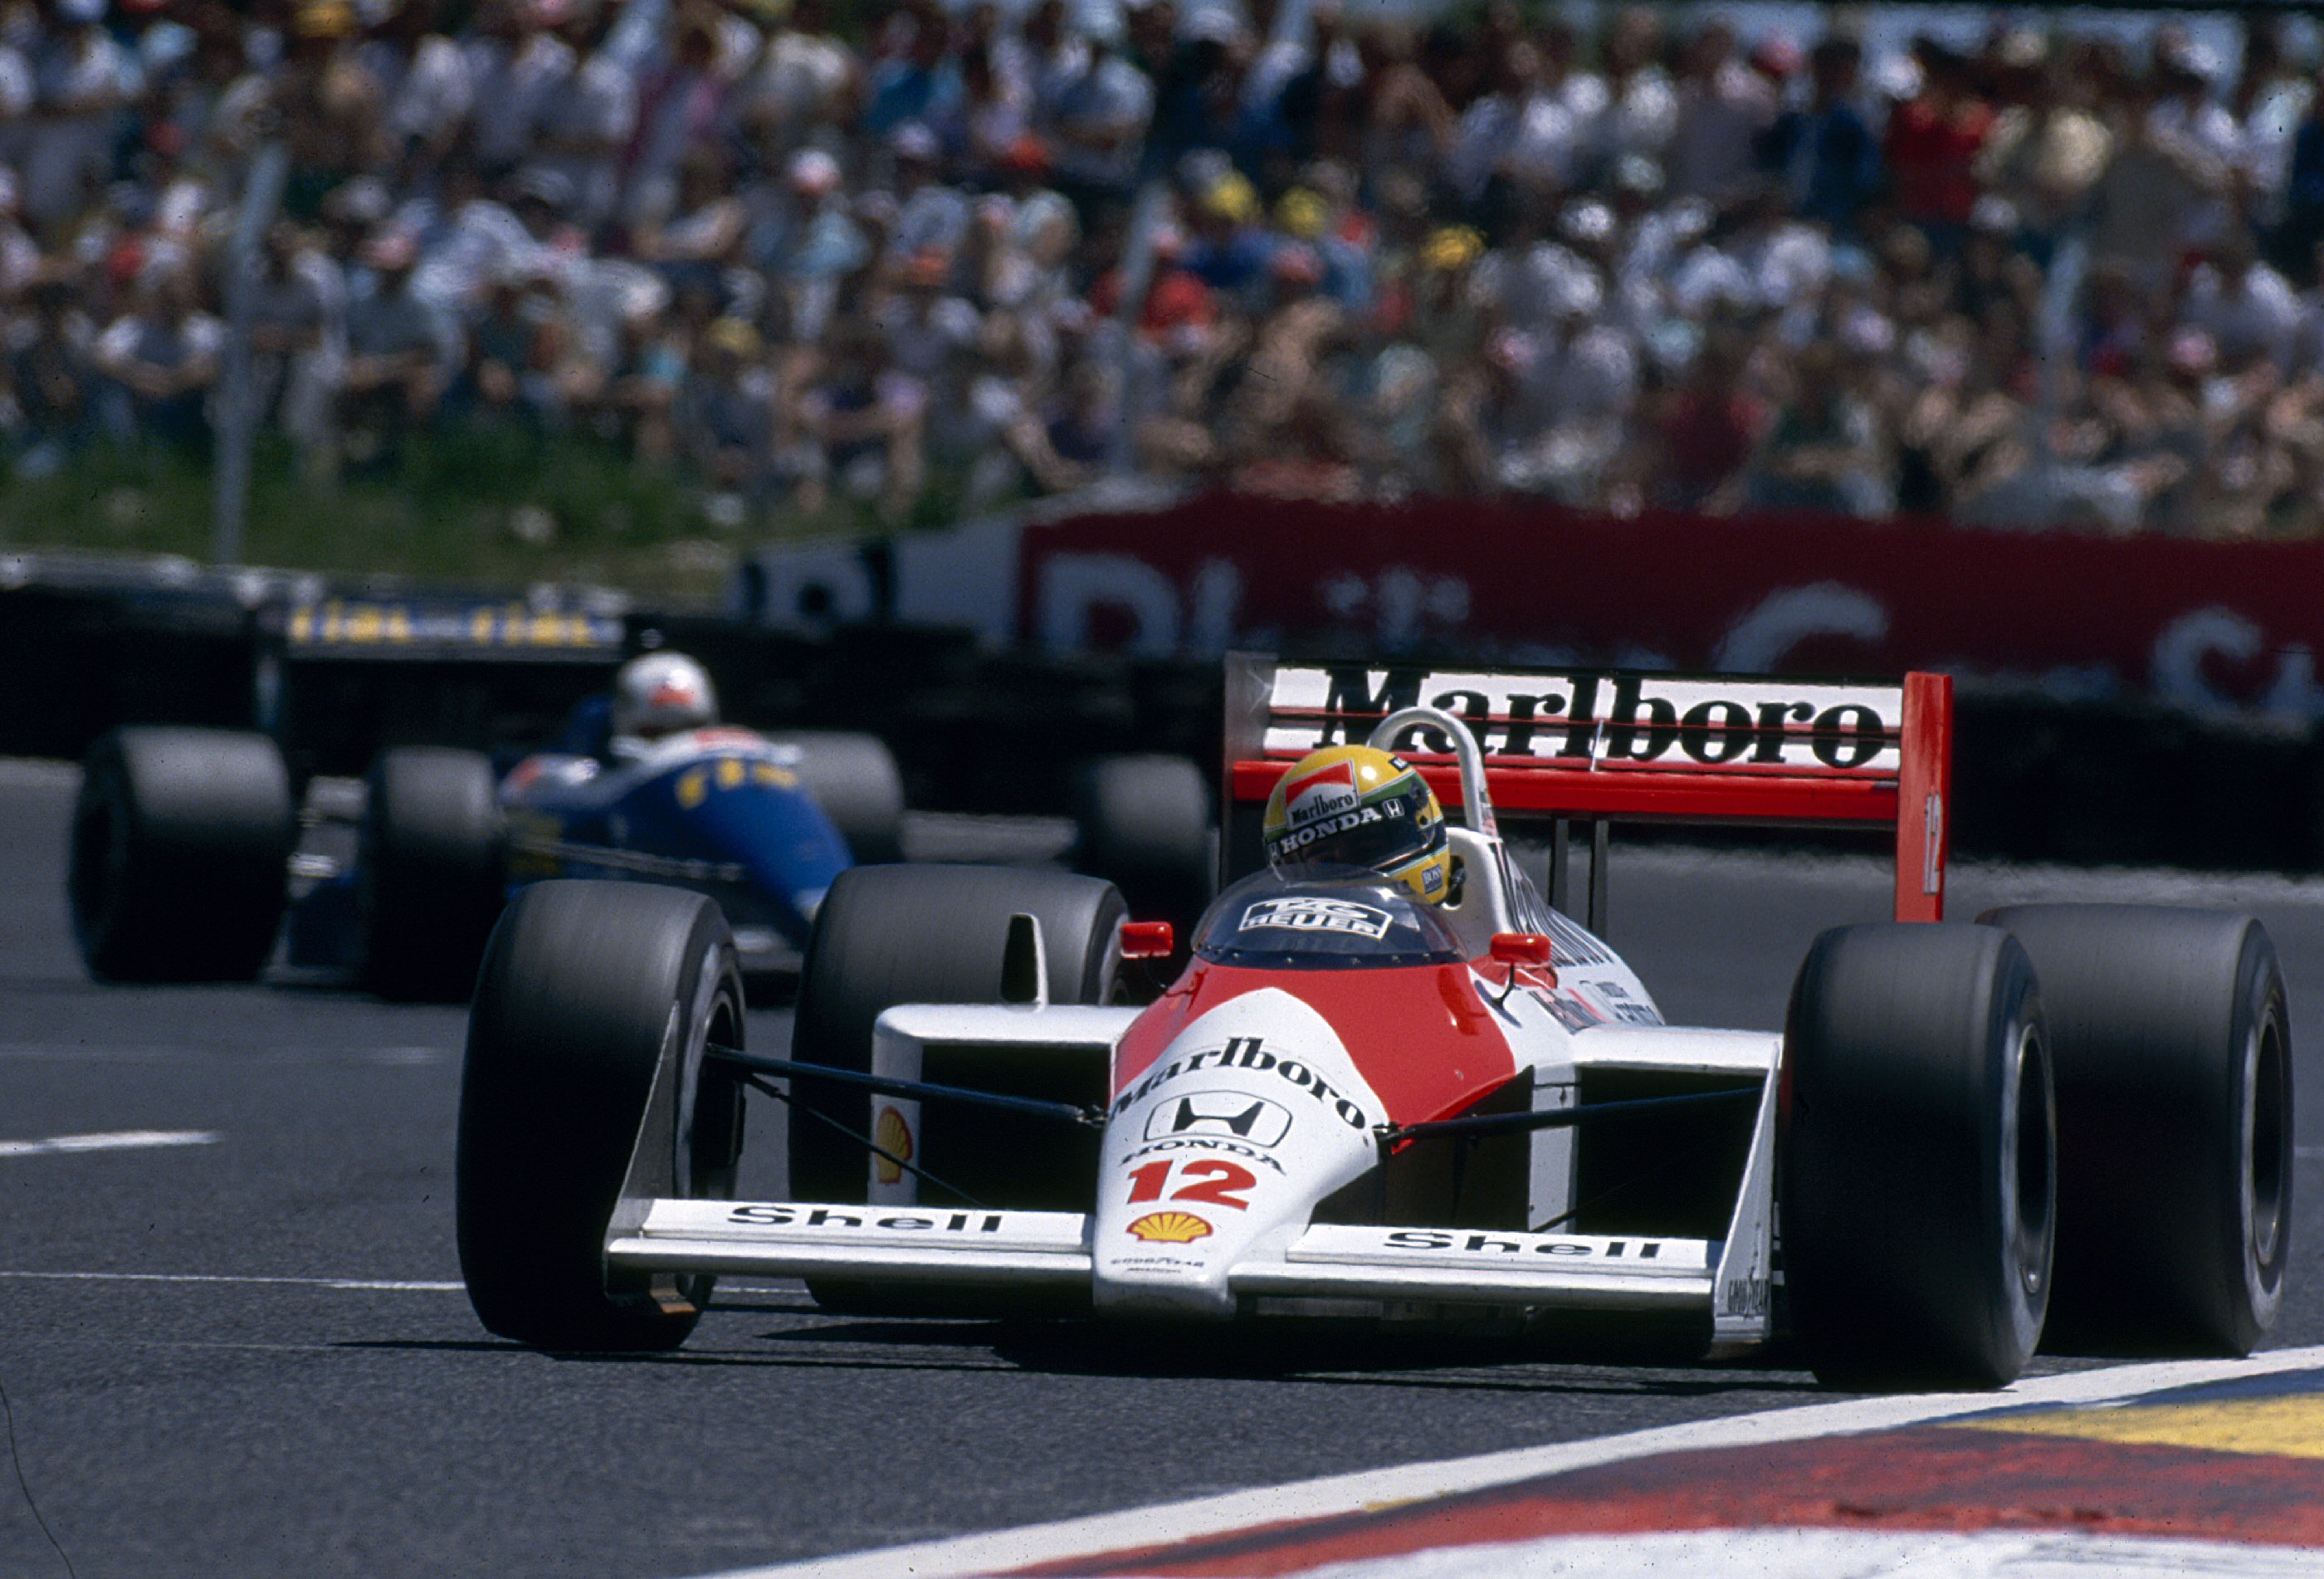 Ayrton Senna, McLaren, 1988 - desktop wallpaper